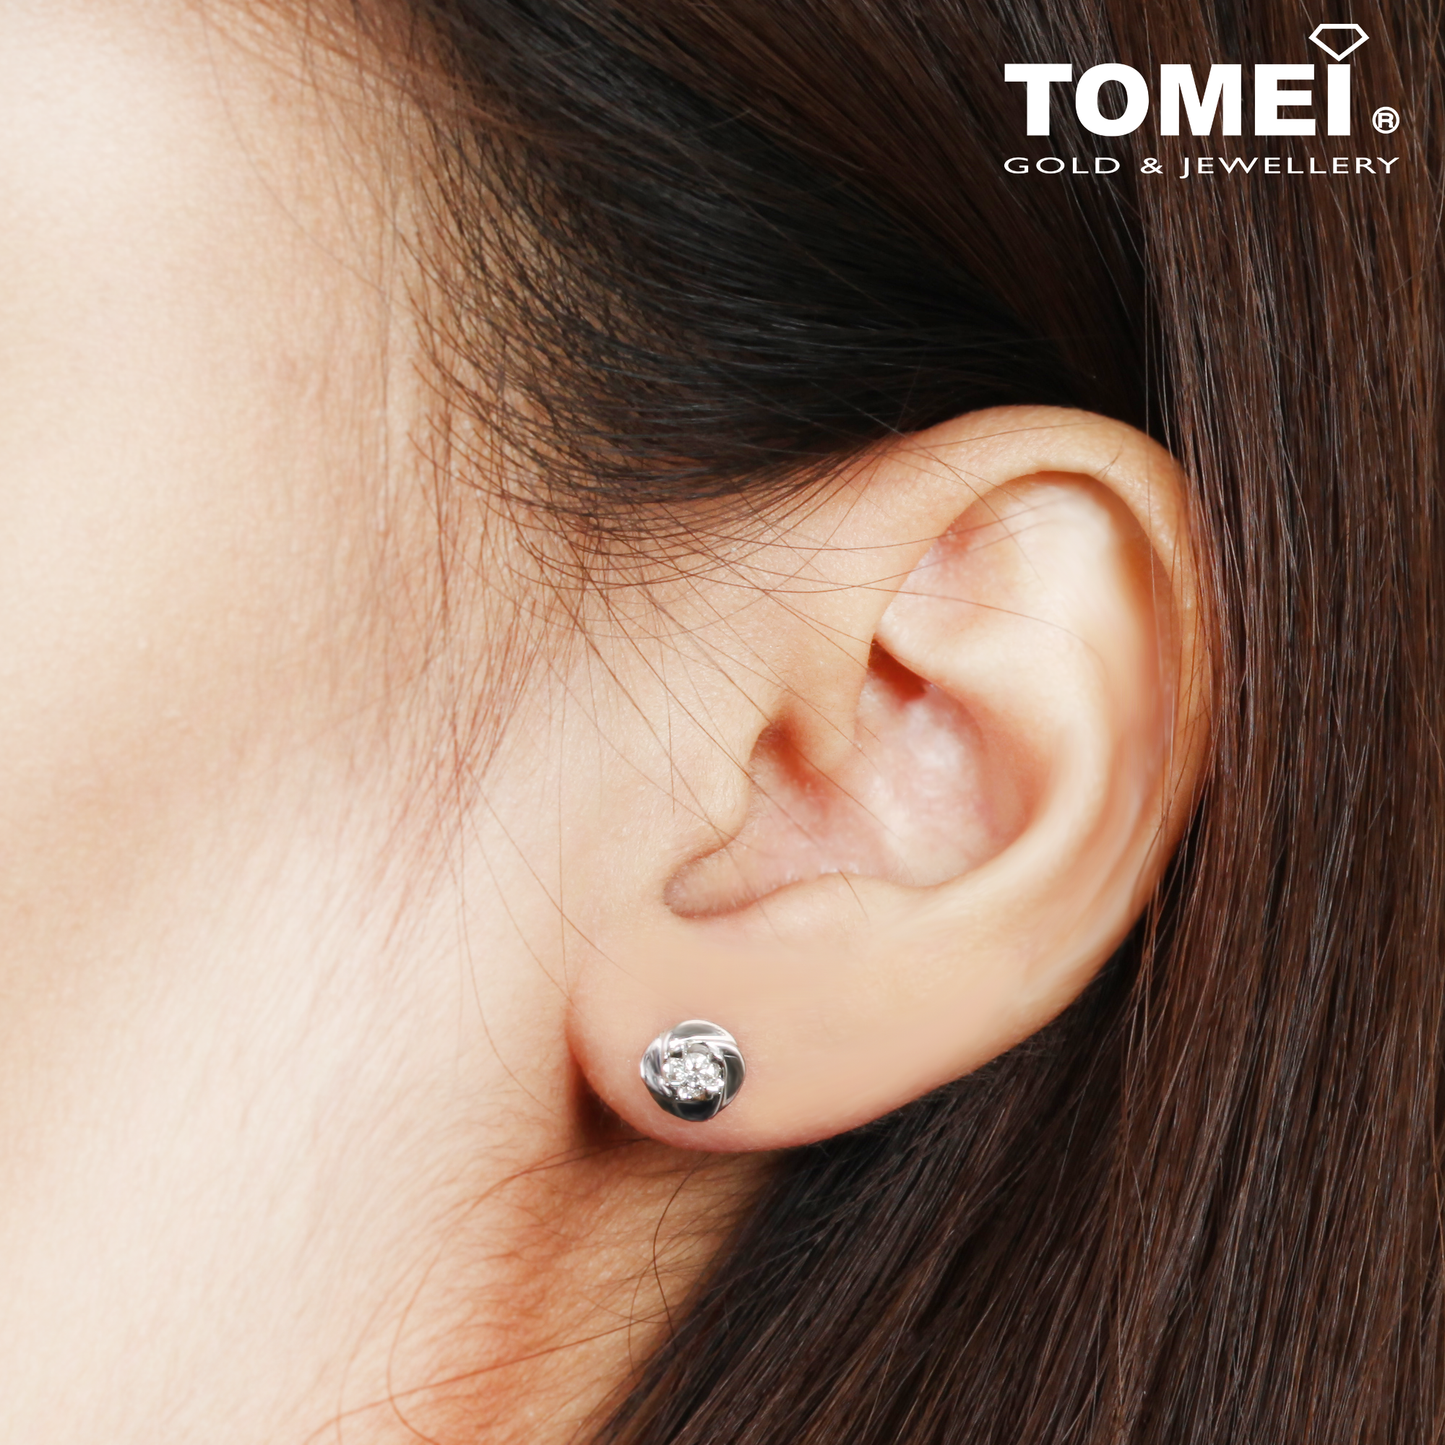 Petals of Love Diamond Earrings | Tomei White Gold 375 (9K) (E1423)